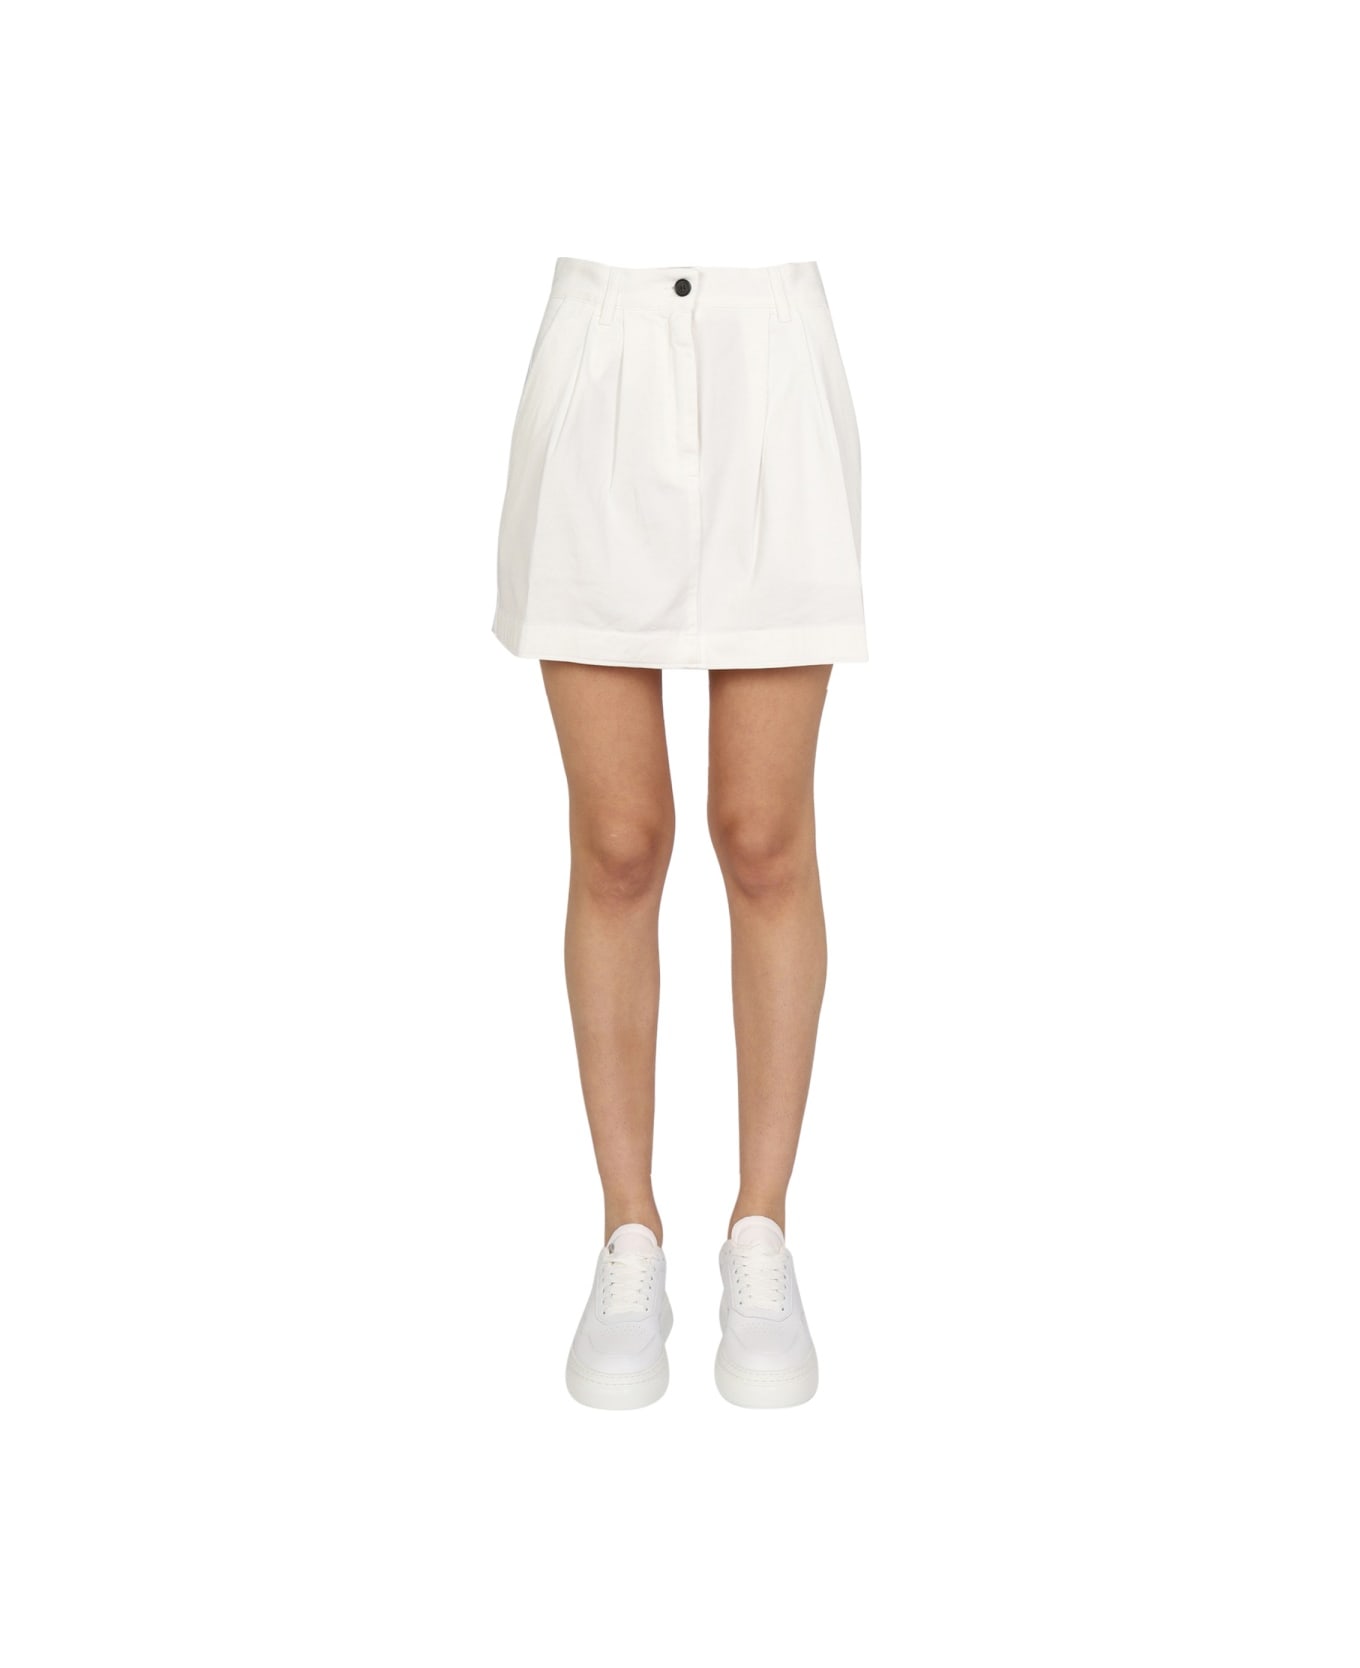 Department Five "sweta" Skirt - WHITE スカート